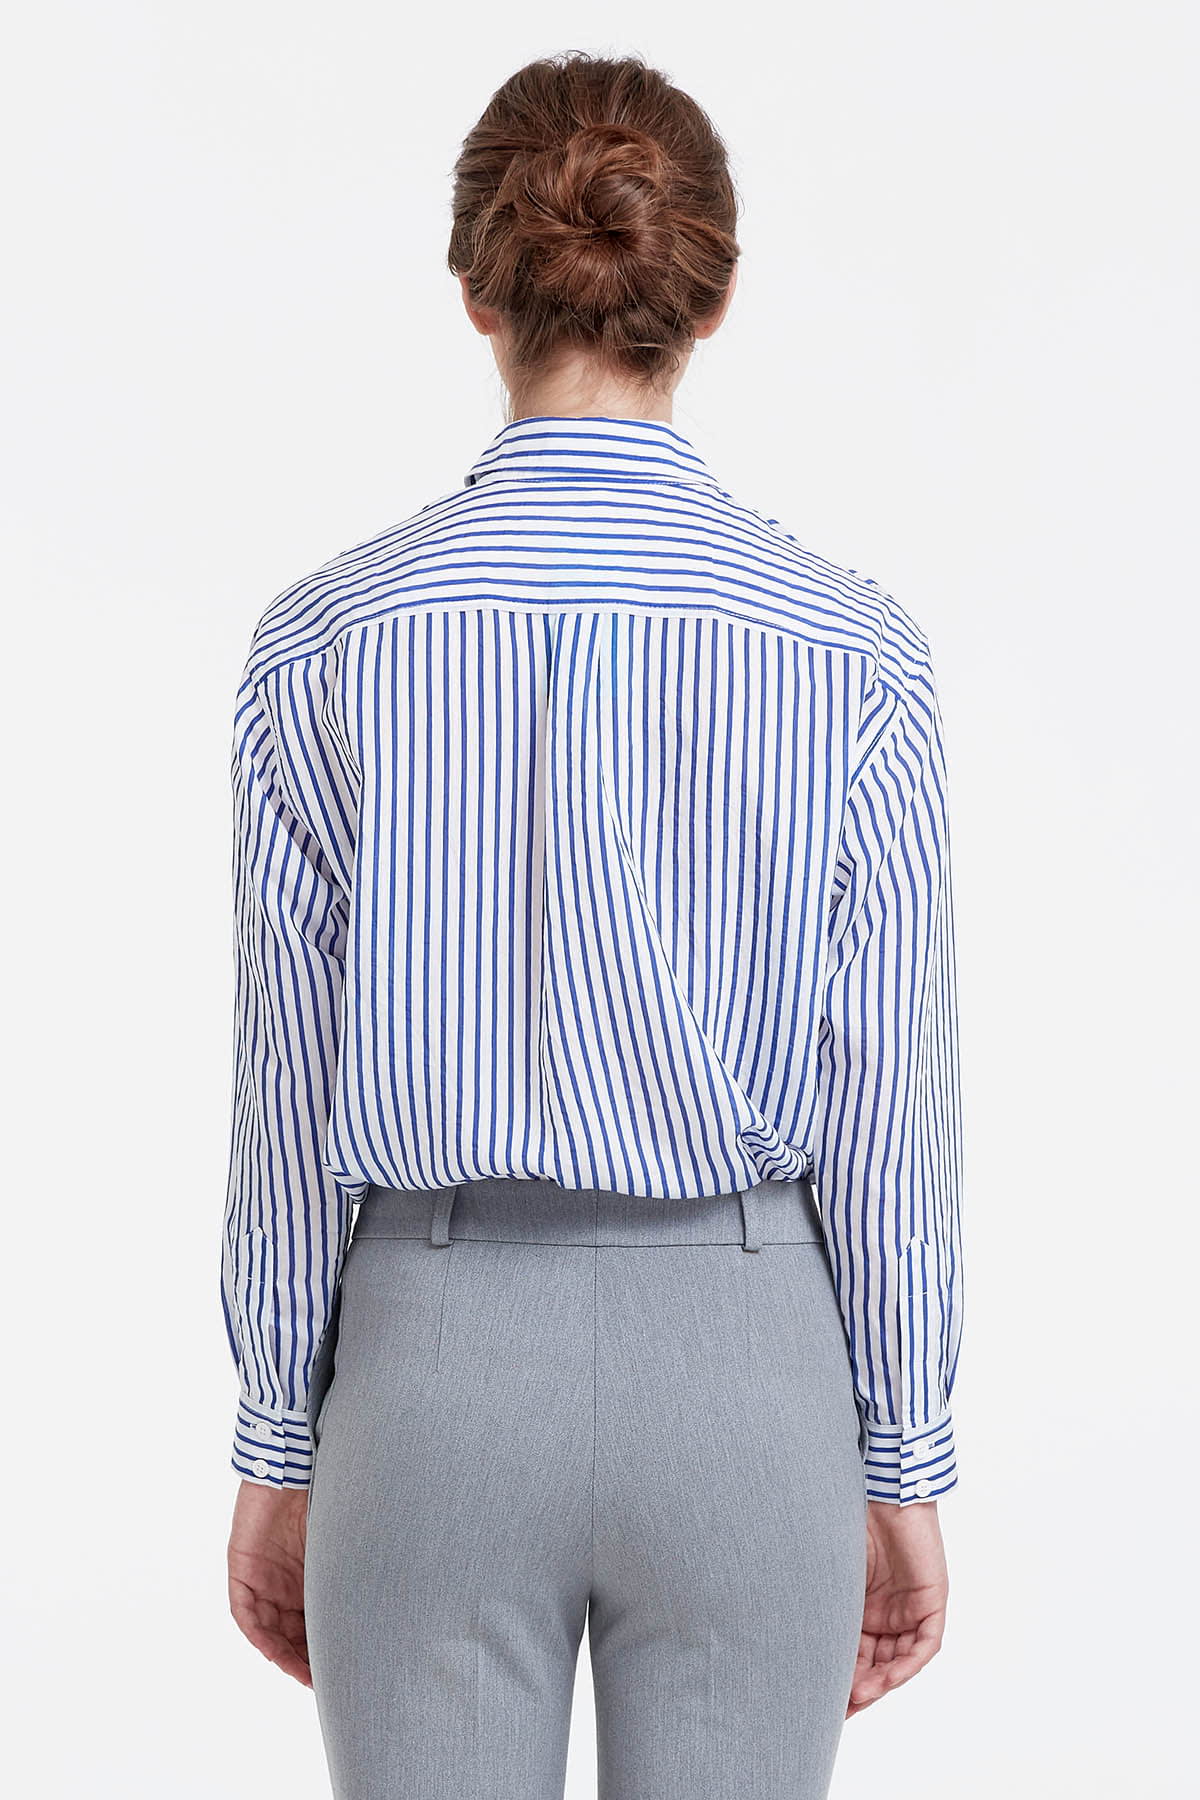 White shirt with blue stripes , photo 4